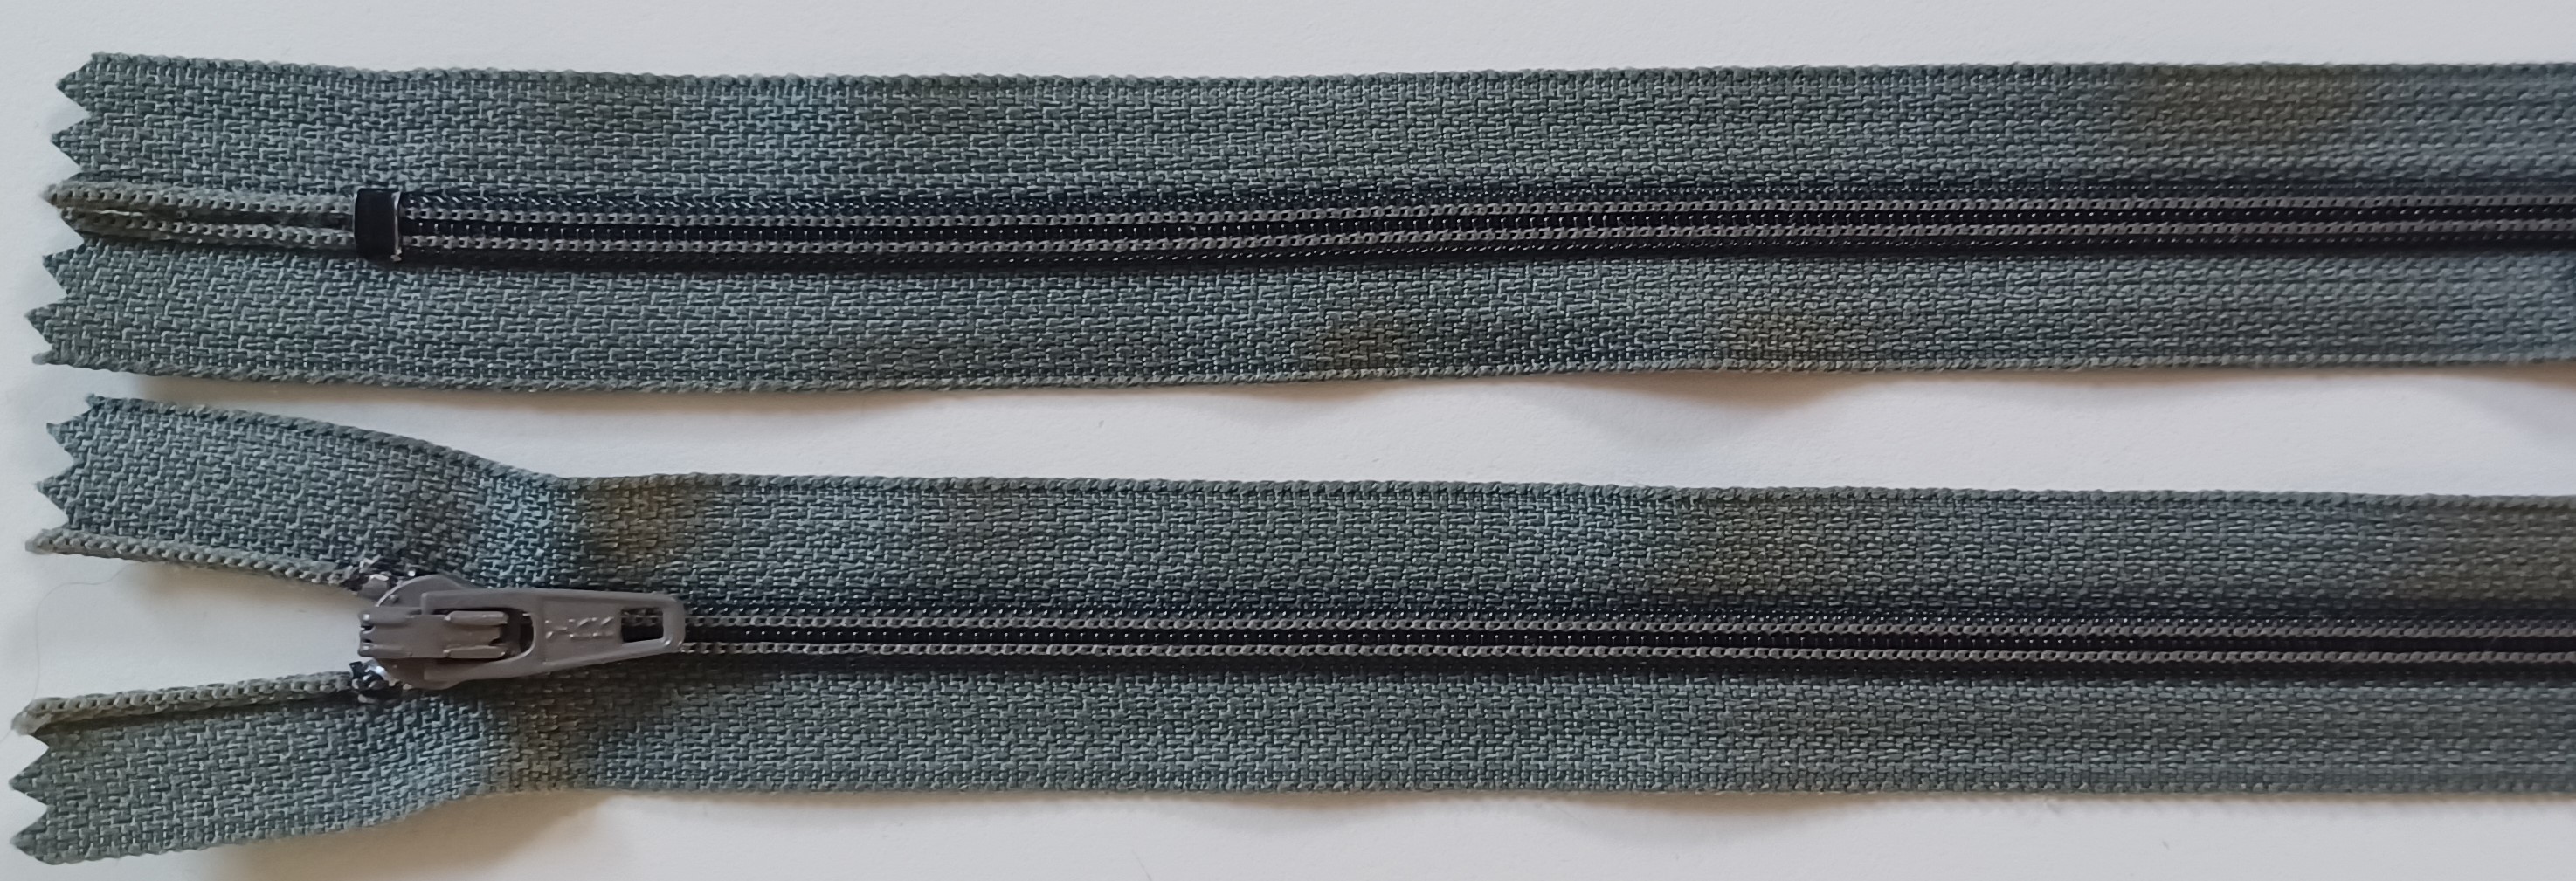 YKK 7" Nylon Coil Zipper